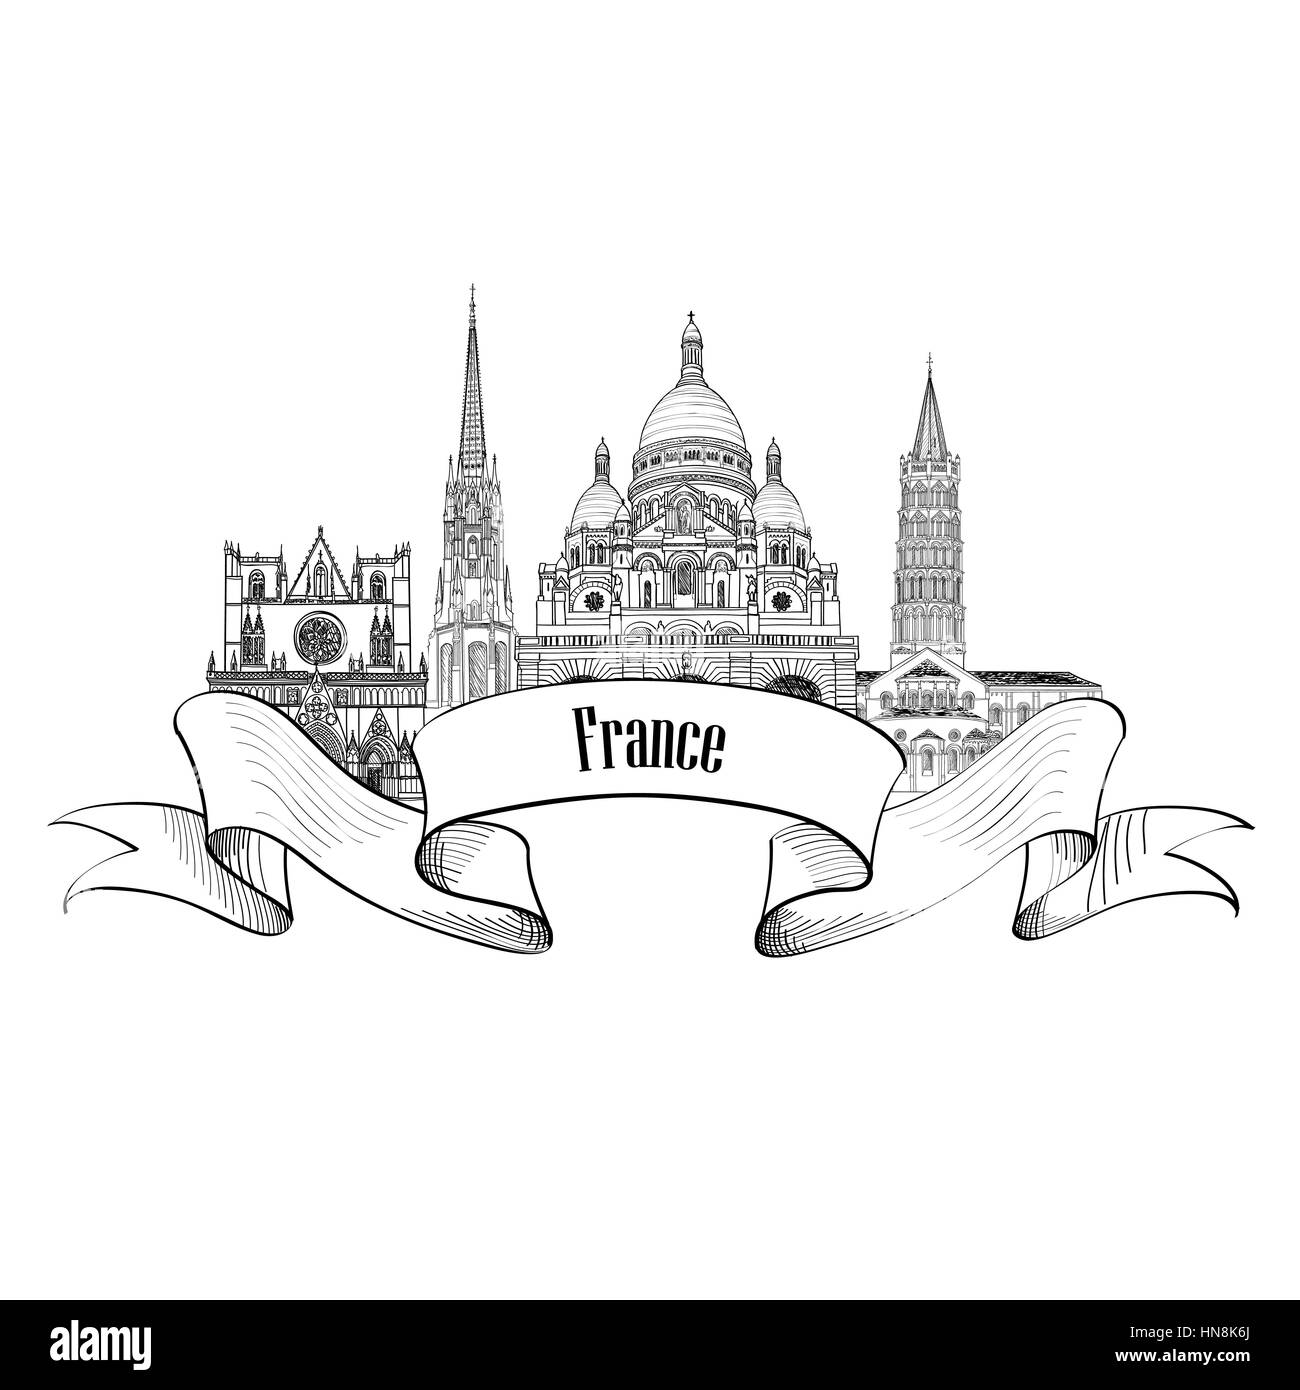 France label. Famous french architectural landmarks. Visit France banner. Stock Vector